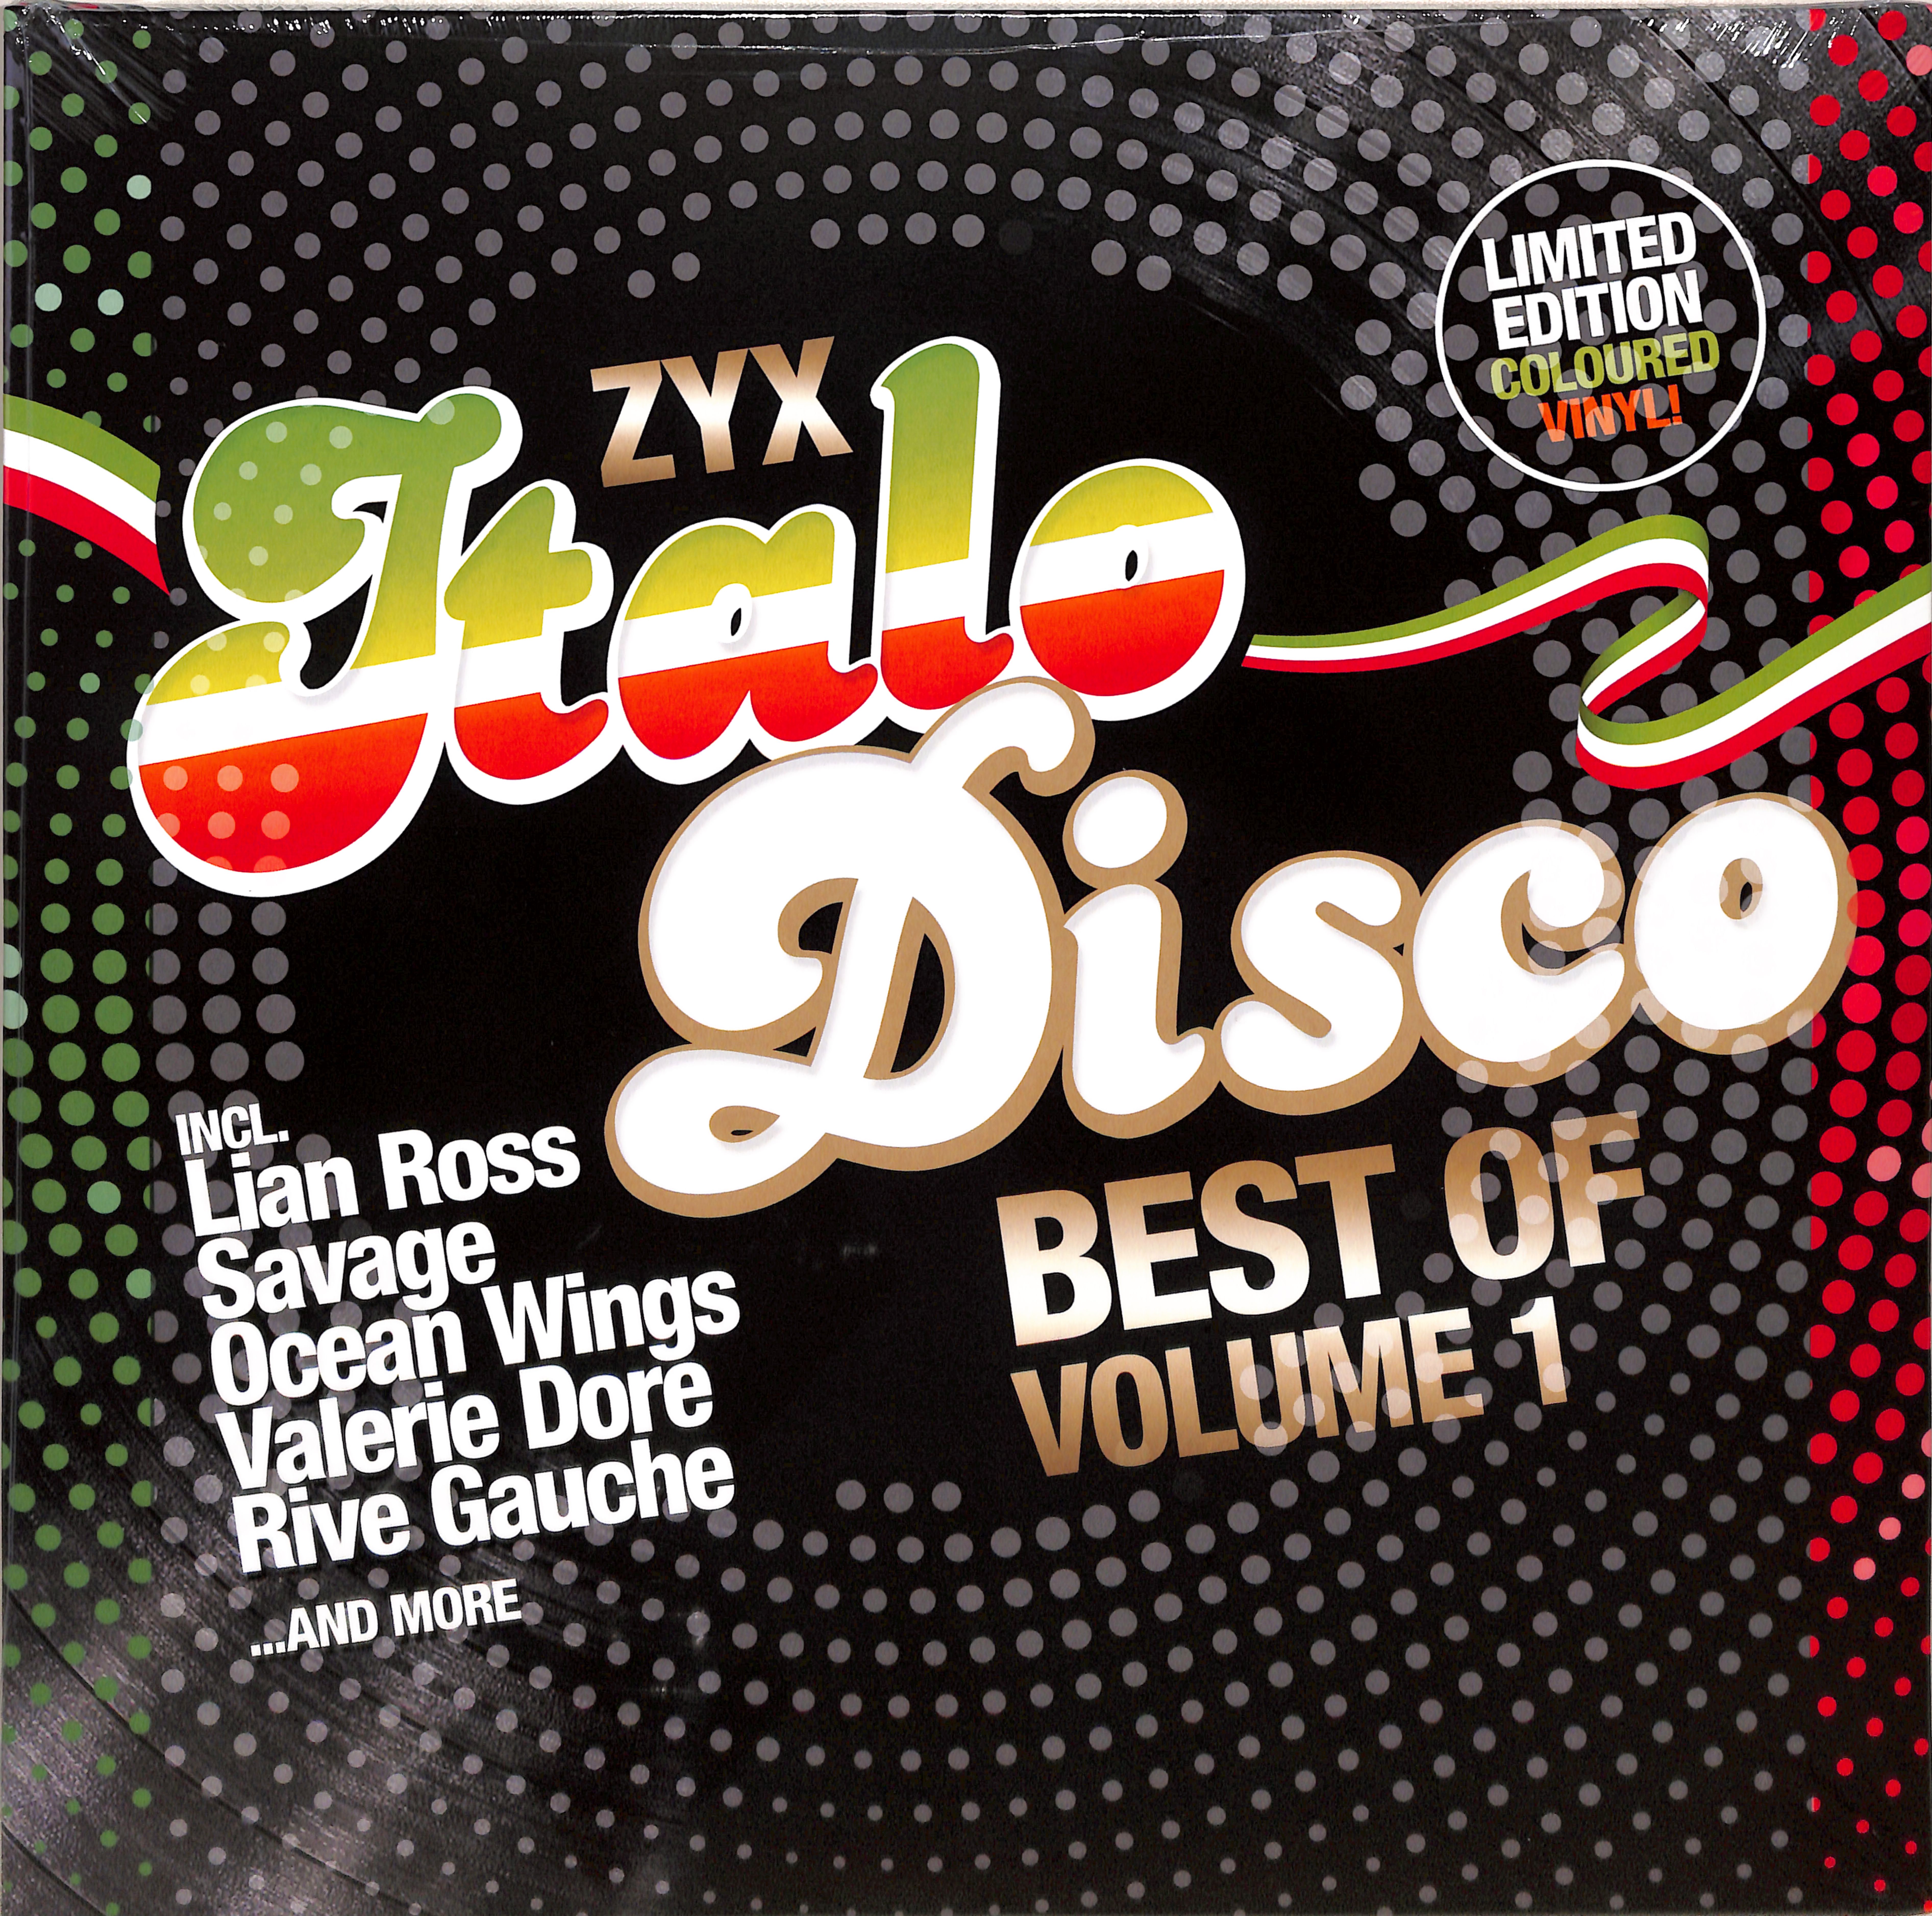 Zyx italo disco new. ZYX Italo Disco: best of Vol.1. ZYX Italo Disco New Generation:Vinyl Edition Vol.2. ZYX Italo Disco - best of Volume 2. The best of Italo Disco обложки.